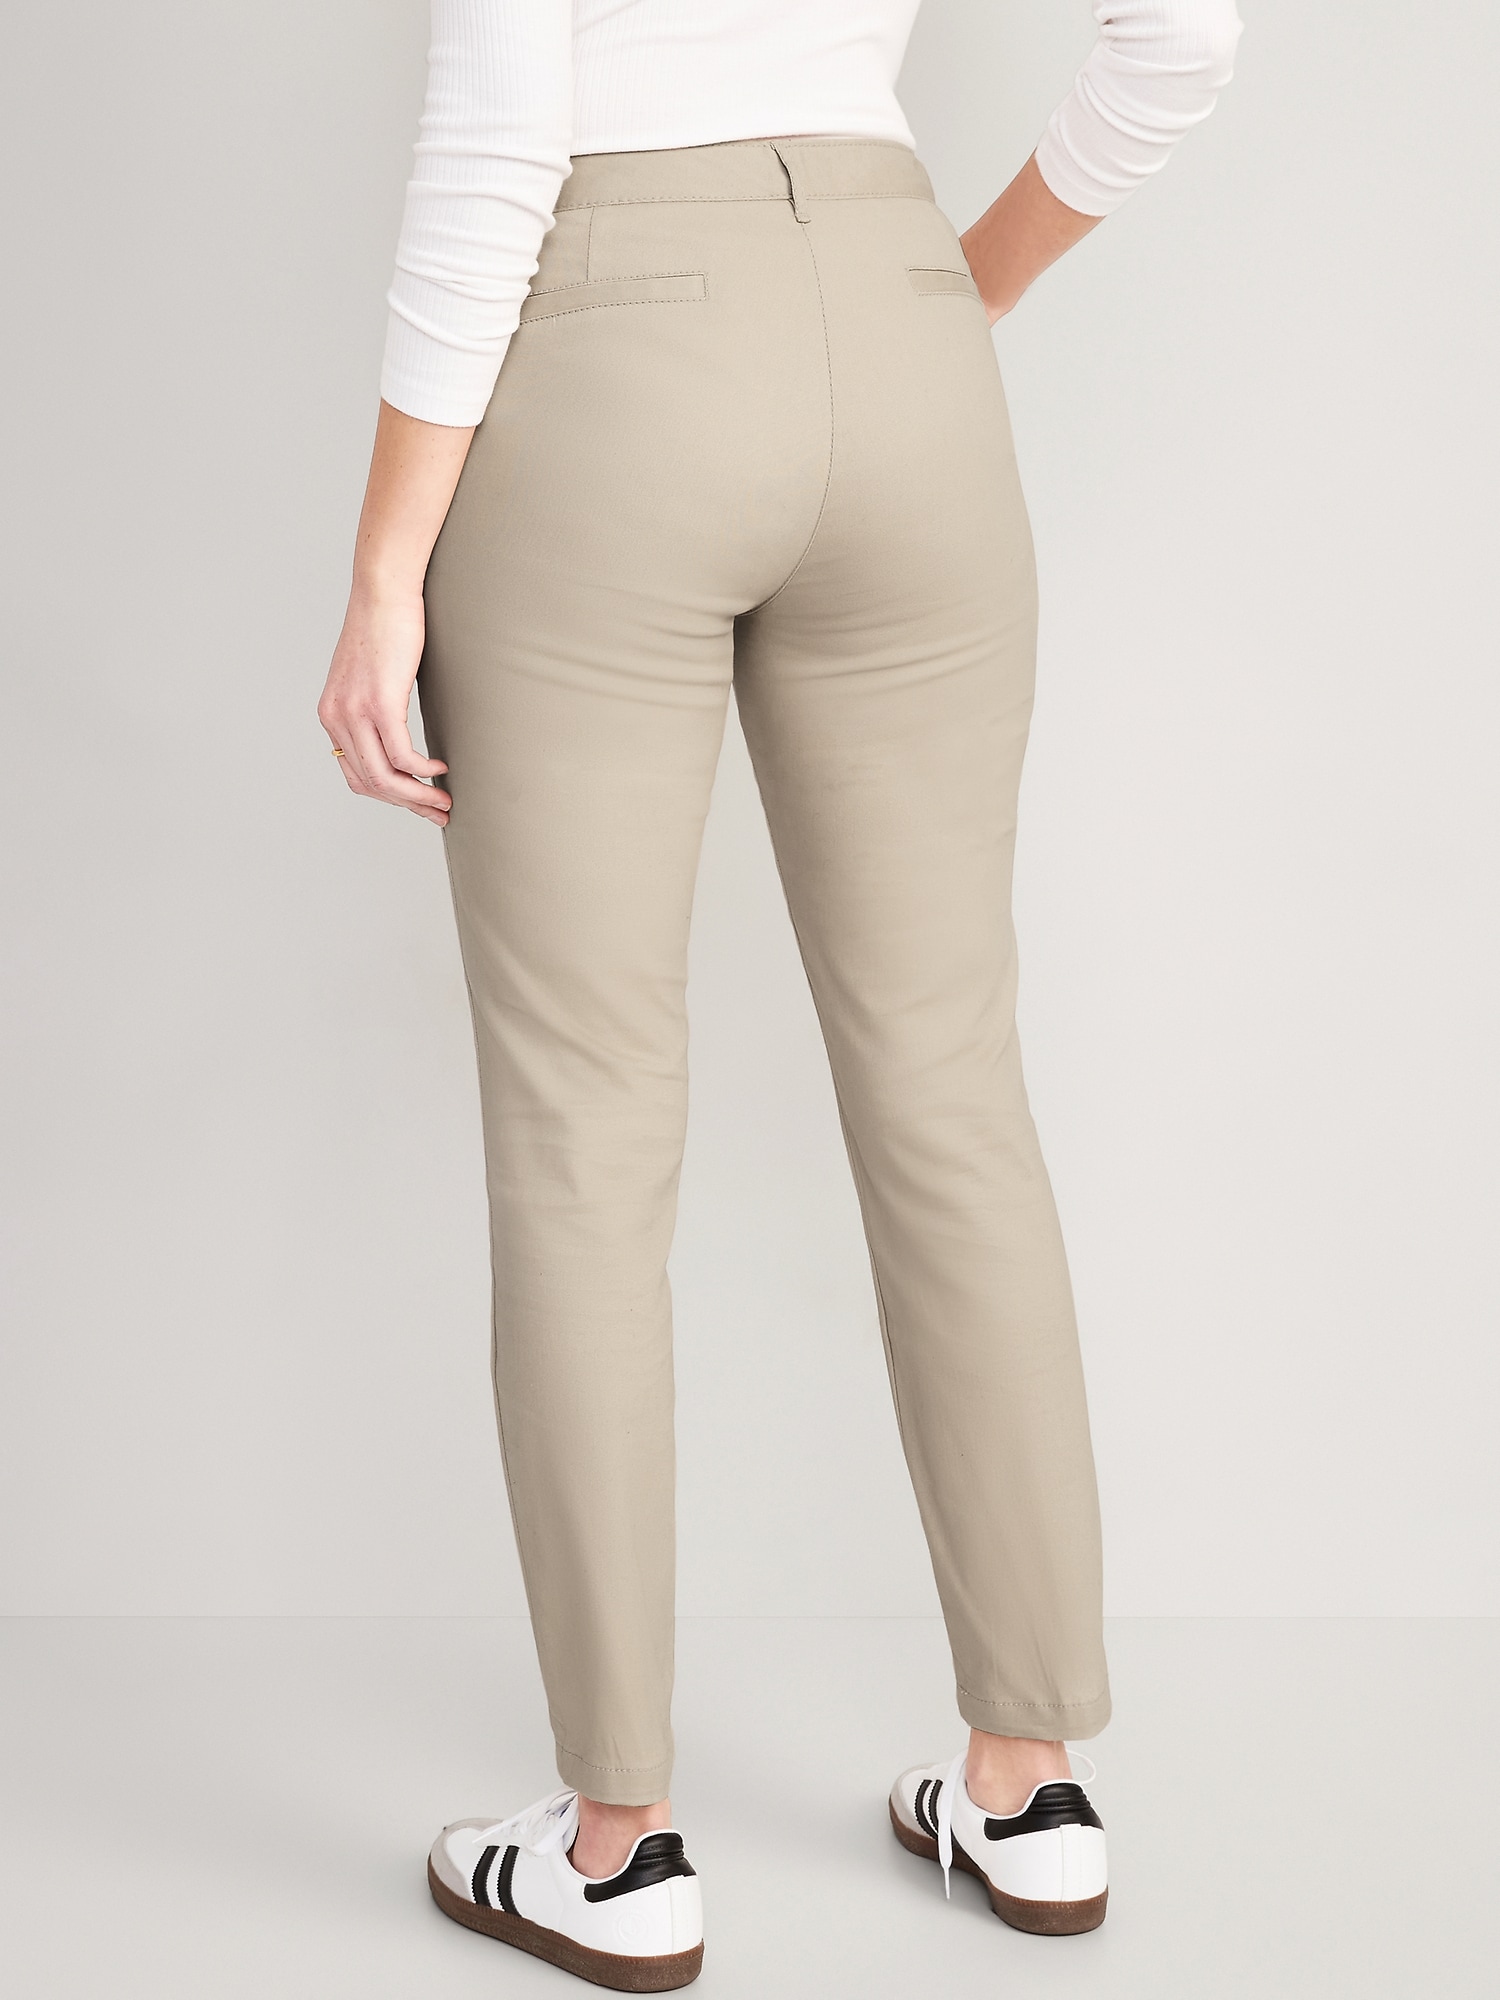 Women's High-Rise Slim Regular Fit Full Pants - A New Day Khaki 10